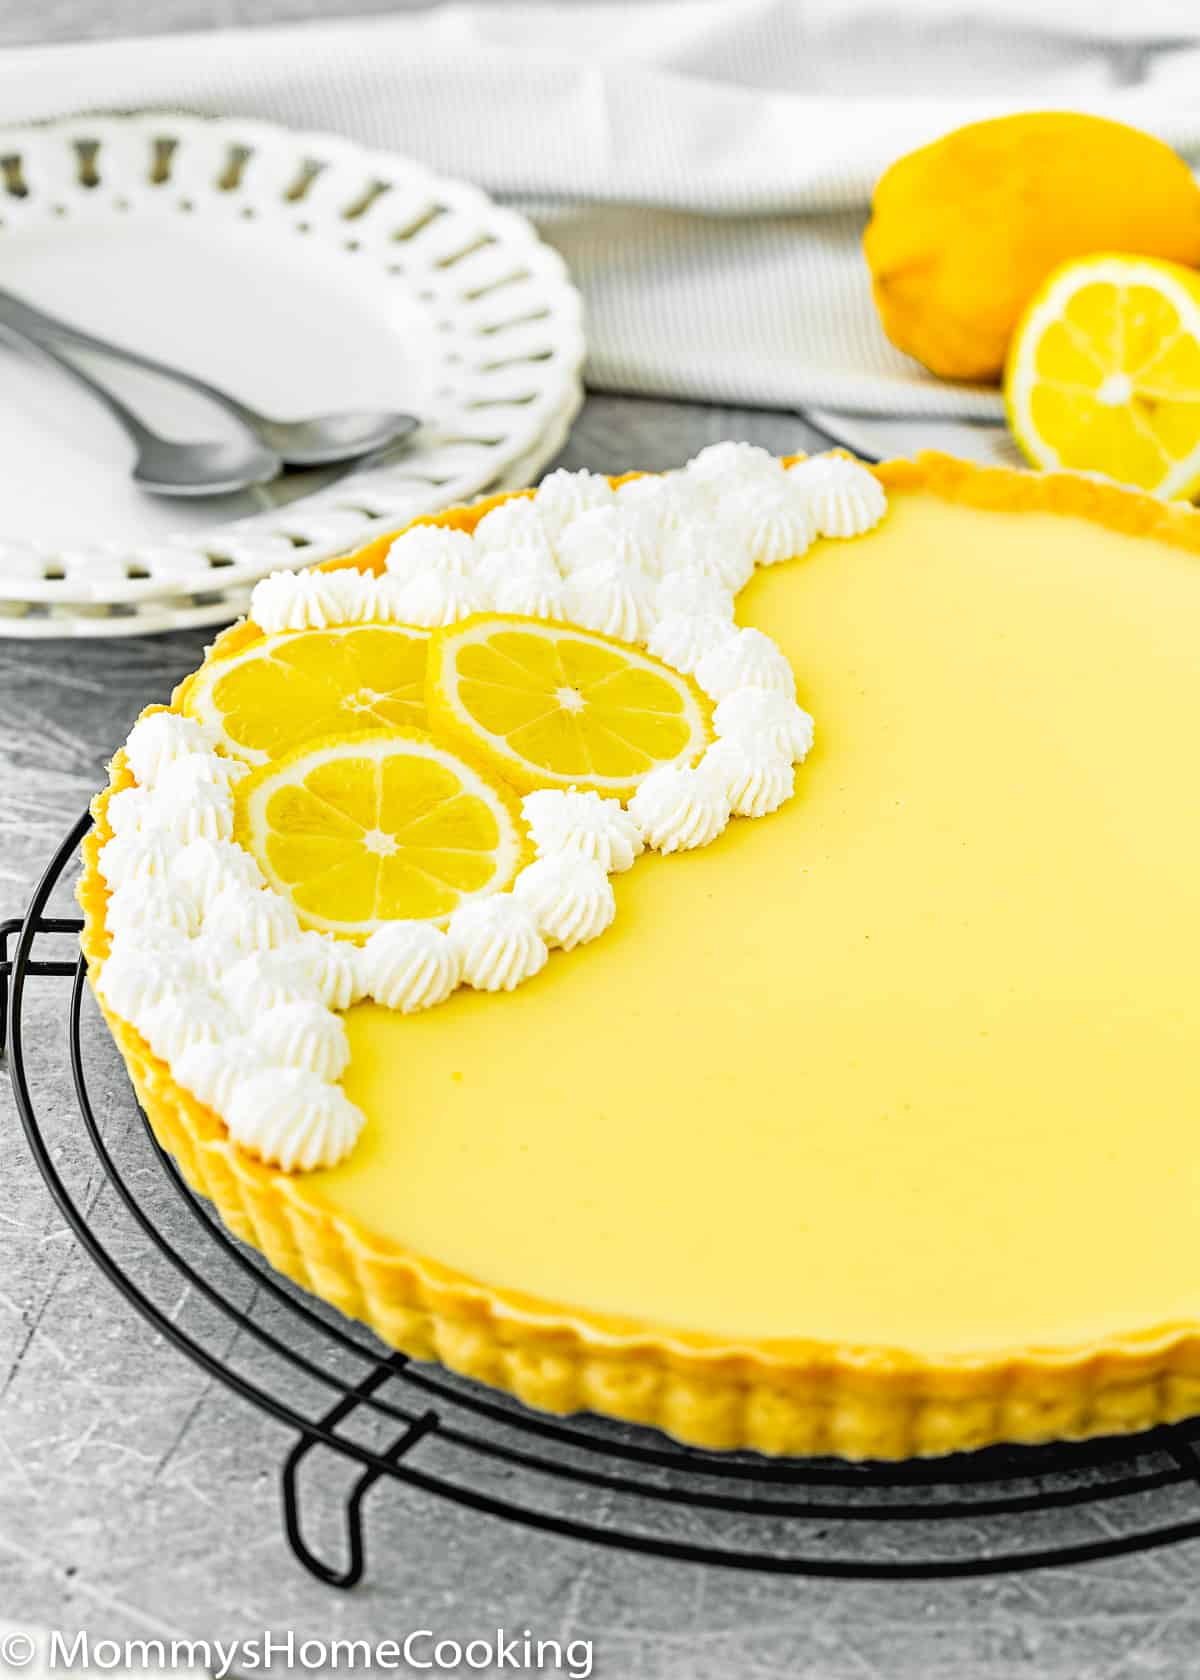 whole Eggless lemon tart decorated with lemon slices and whipped cream.